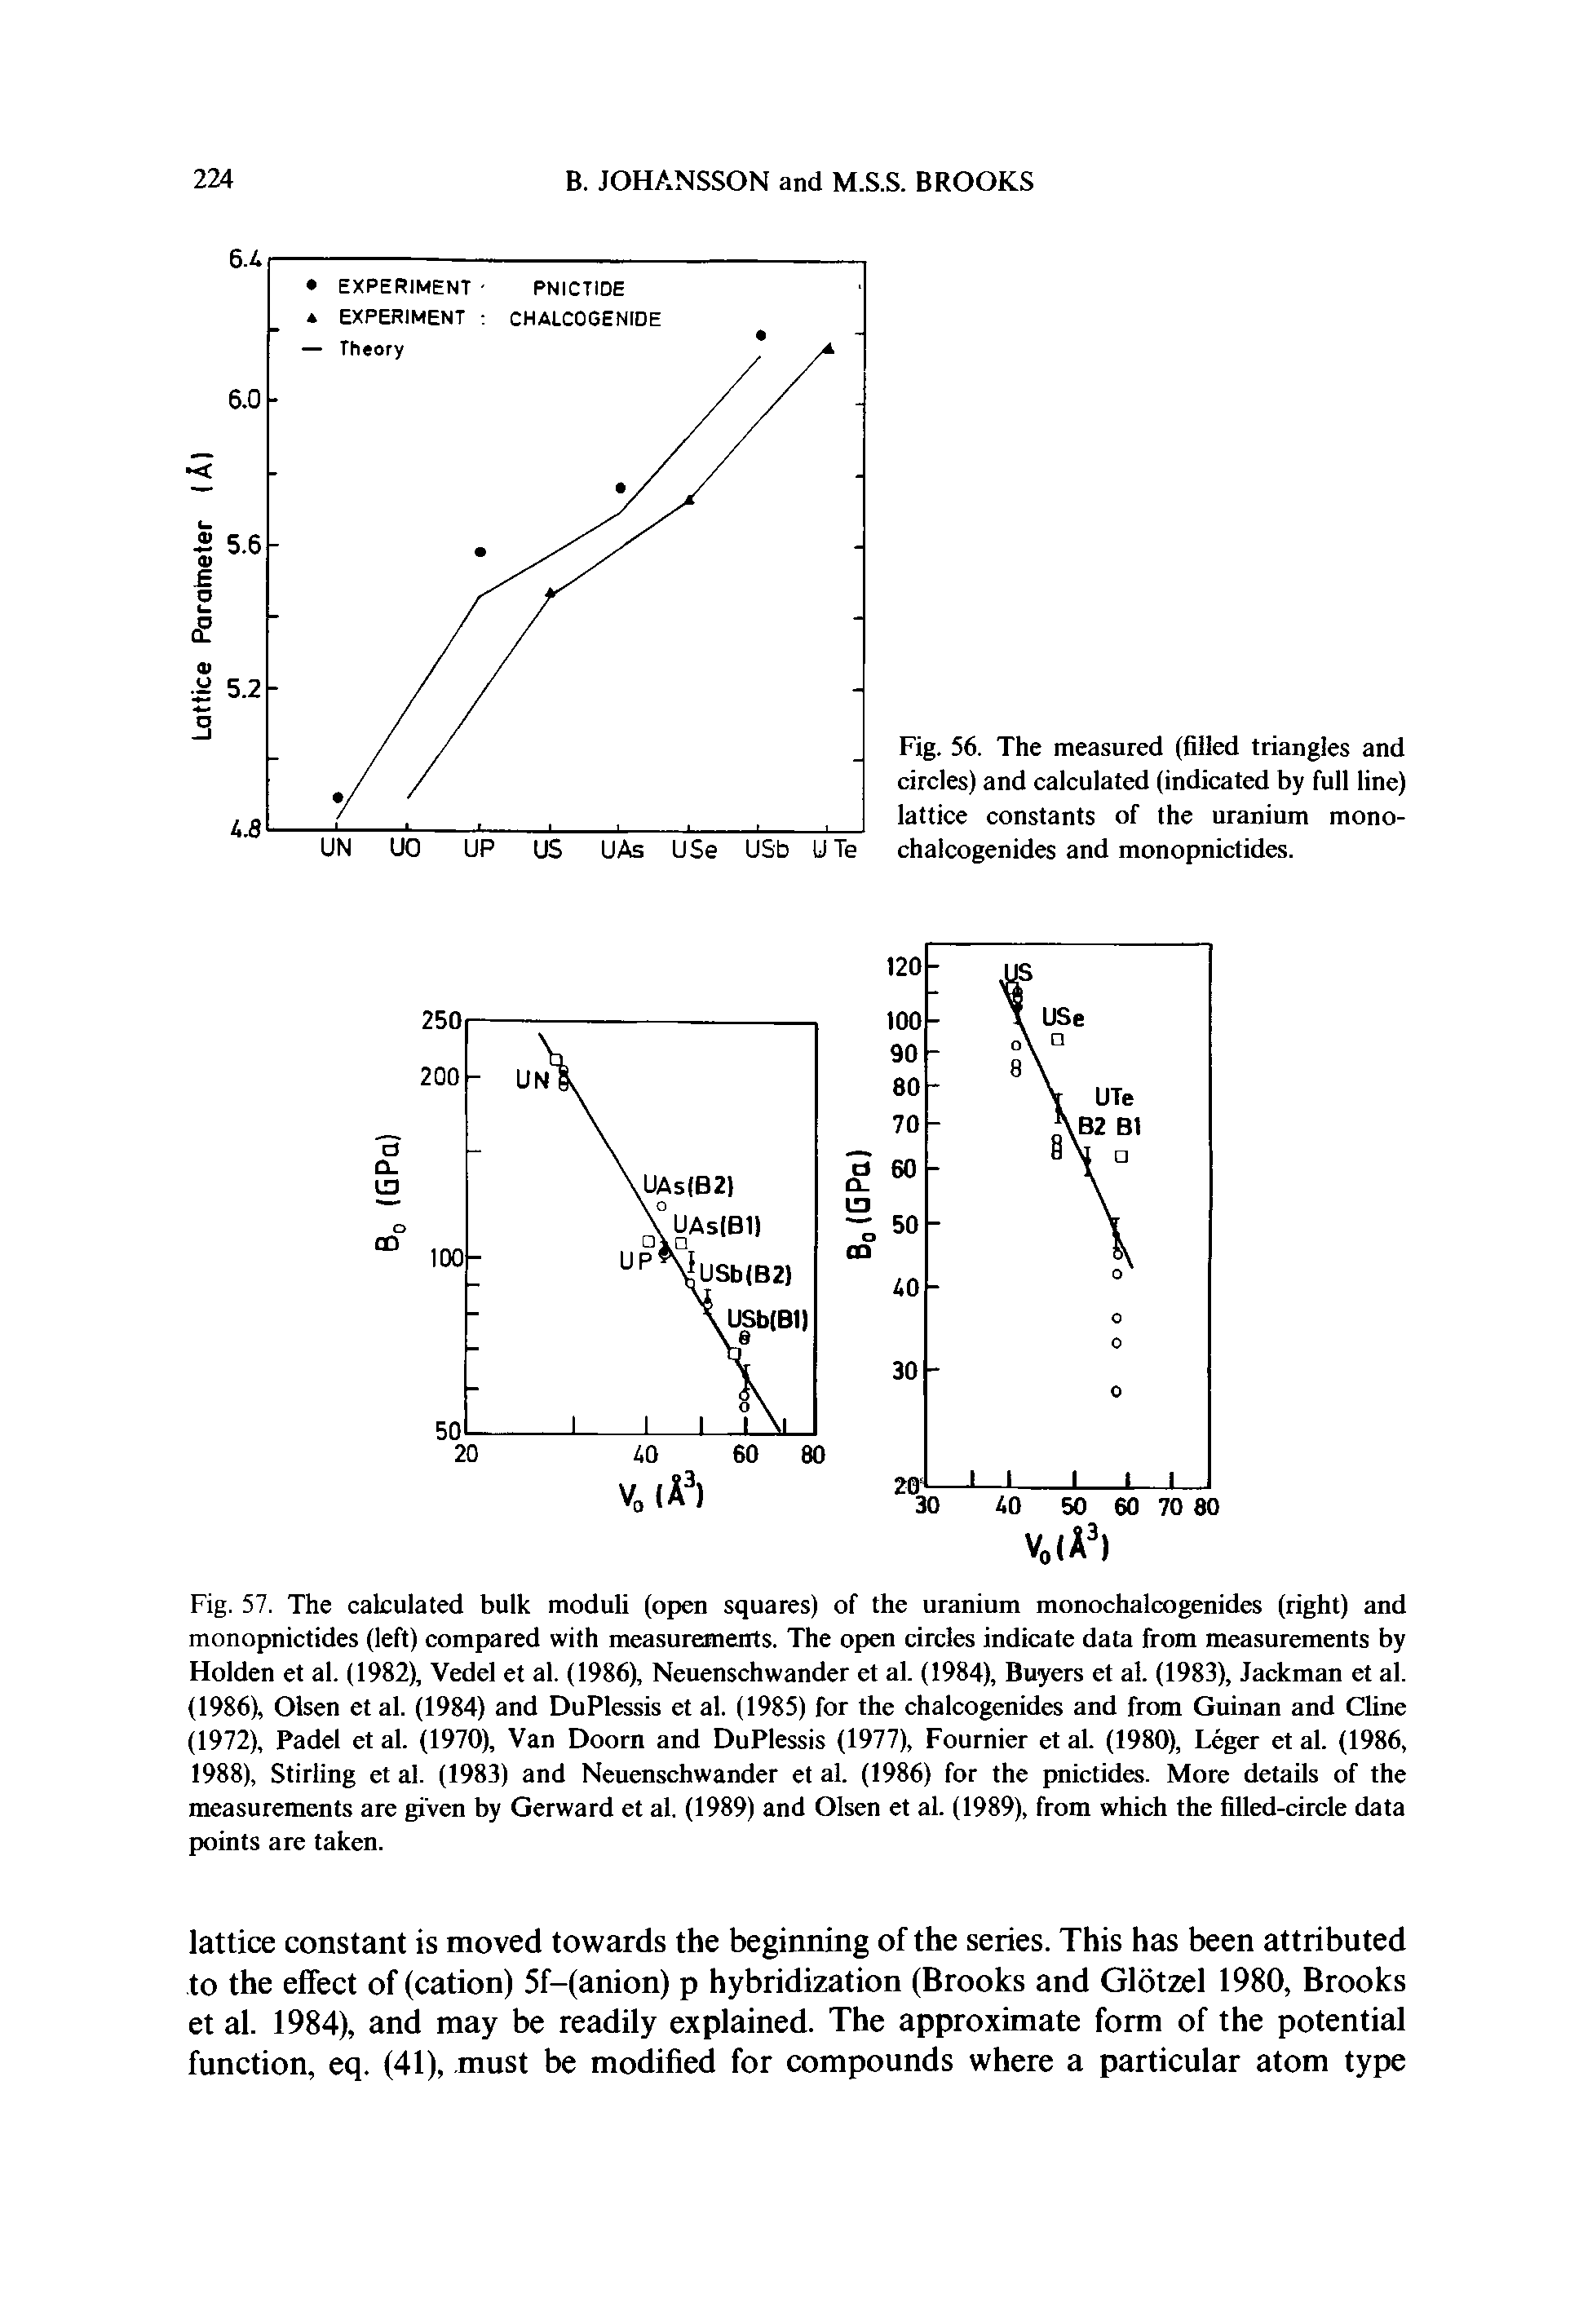 Fig. 57. The calculated bulk moduli (open squares) of the uranium monochalcogenides (right) and monopnictides (left) compared with measurements. The open circles indicate data from measurements by Holden et al. (1982), Vedel et al. (1986), Neuenschwander et al. (1984), Buyers et al. (1983), Jackman et al. (1986), Olsen et al. (1984) and DuPlessis et al. (1985) for the chalcogenides and from Guinan and Cline (1972), Padel et al. (1970), Van Doom and DuPlessis (1977), Fournier et al. (1980), Leger et al. (1986, 1988), Stirling et al. (1983) and Neuenschwander et al. (1986) for the pnictides. More details of the measurements are given by Gerward et al. (1989) and Olsen et al. (1989), from which the filled-circle data points are taken.